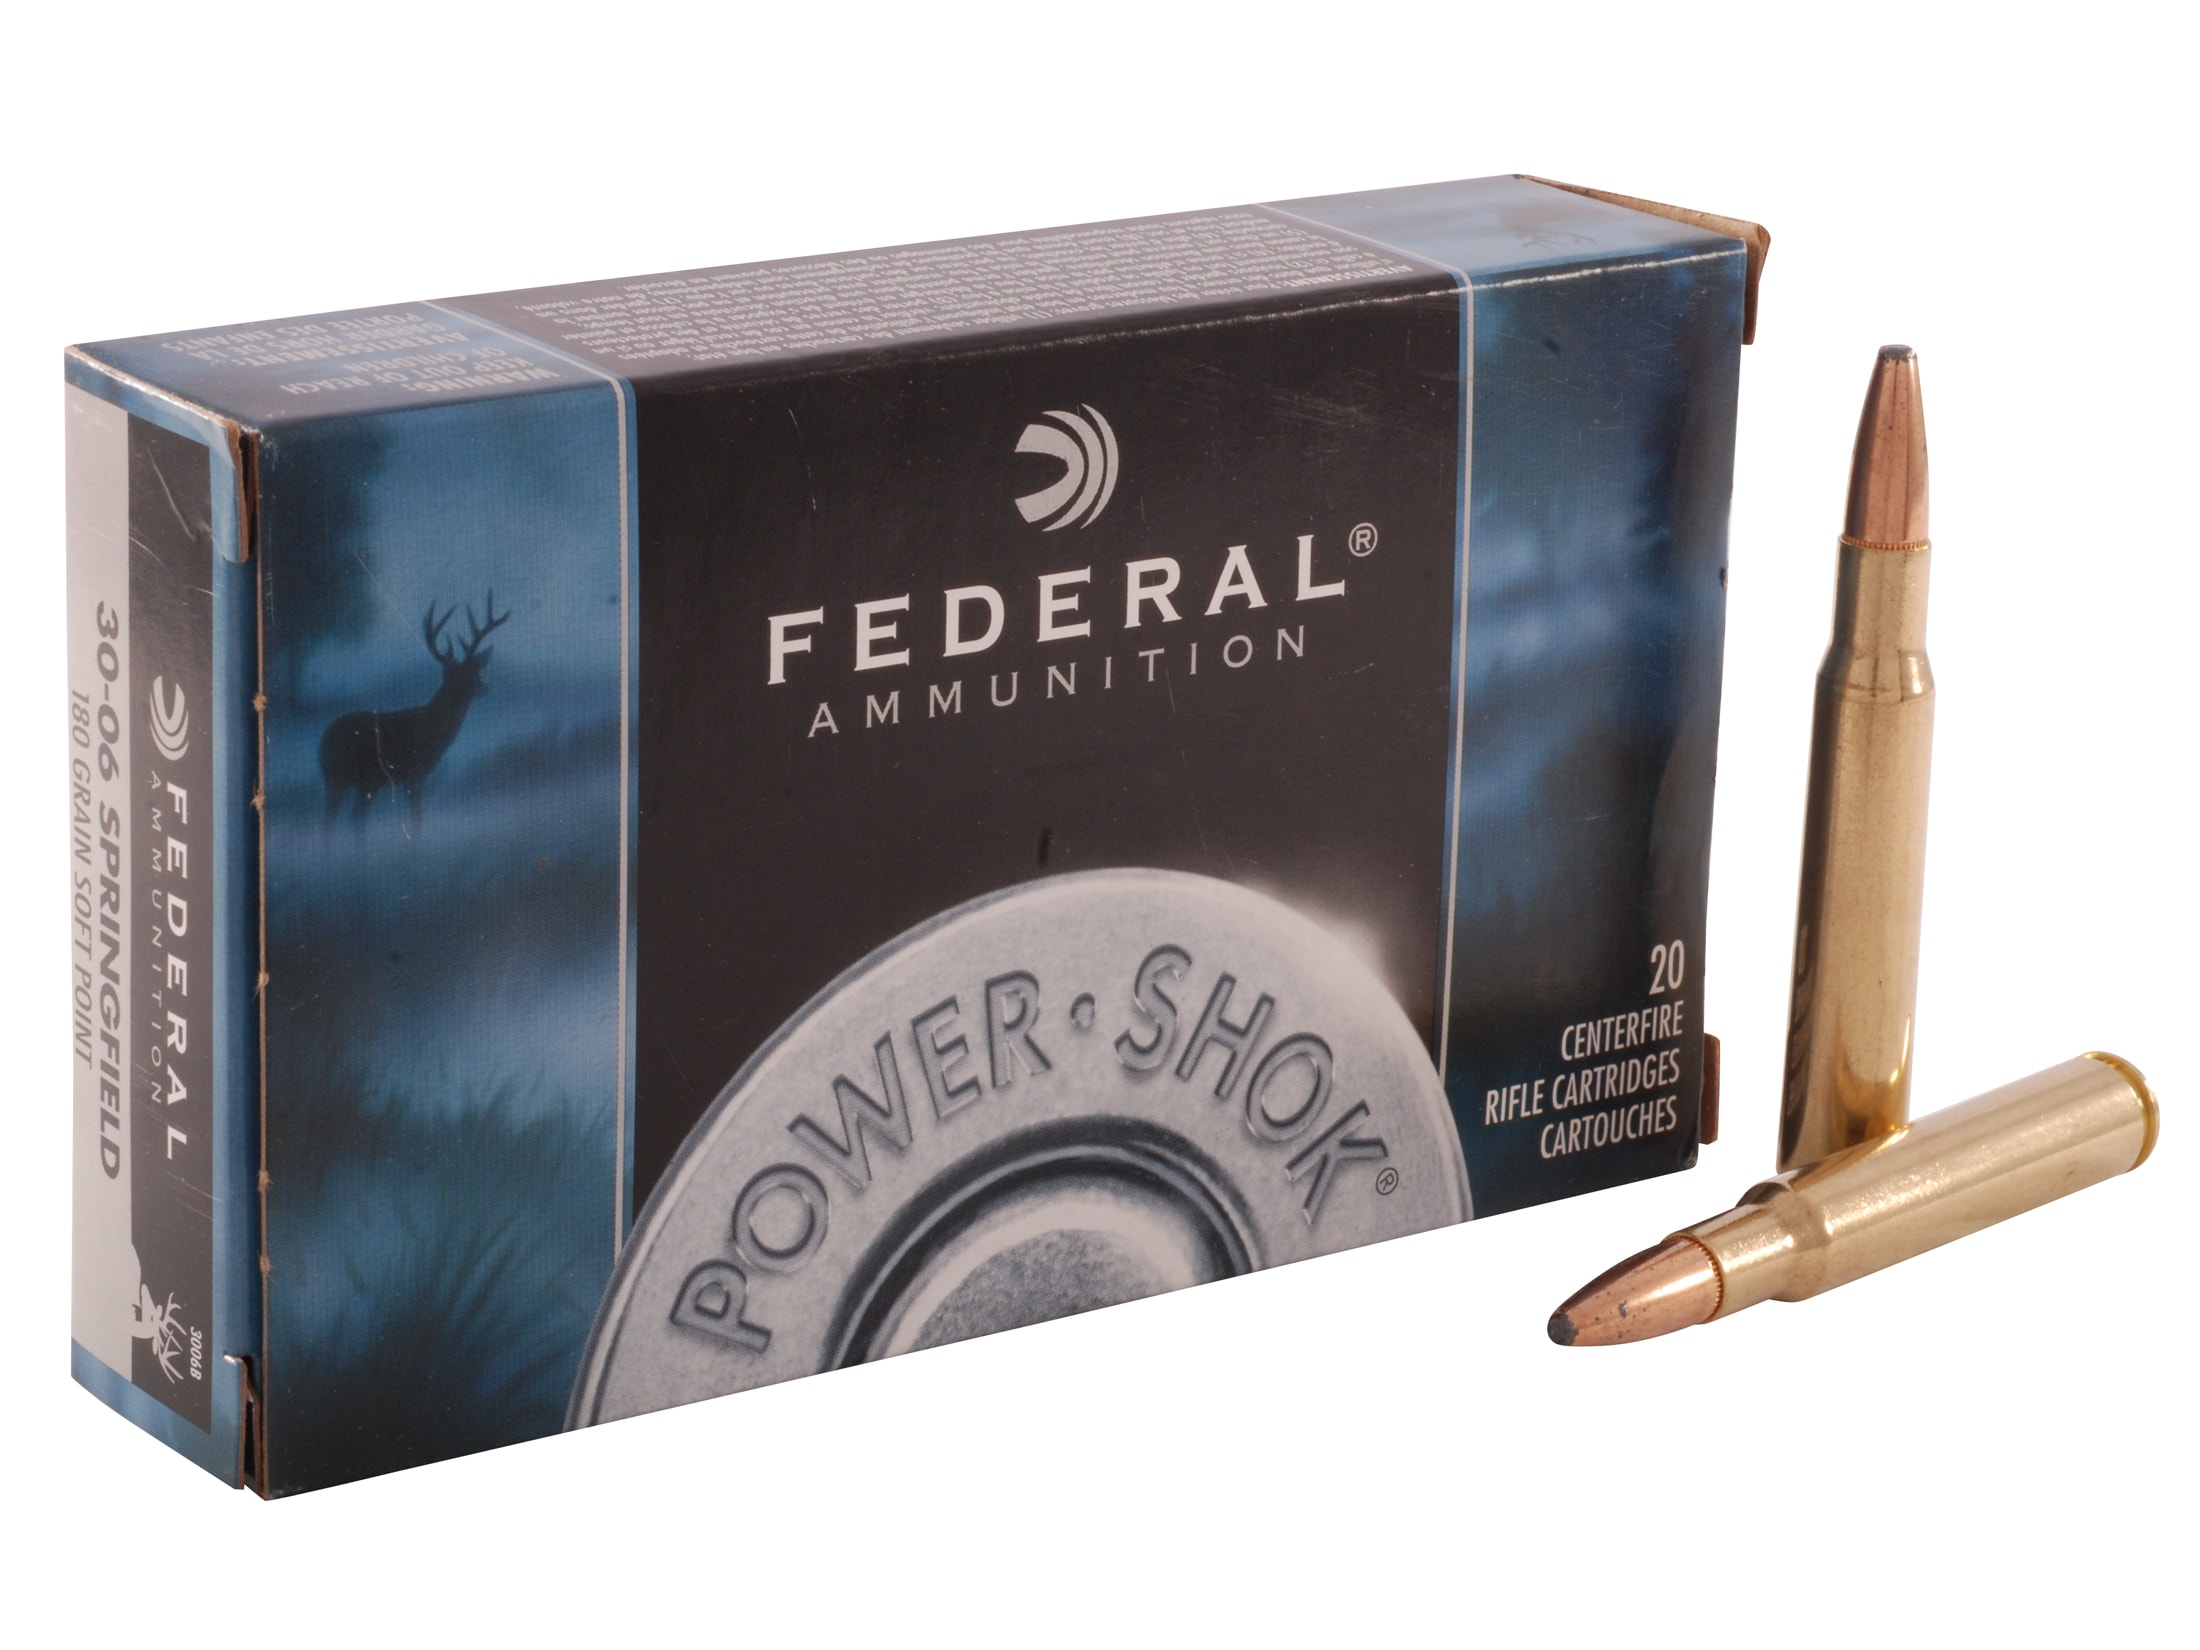 Federal Power-Shok Ammunition 30-06 Springfield 180 Grain Soft Point Box of 20